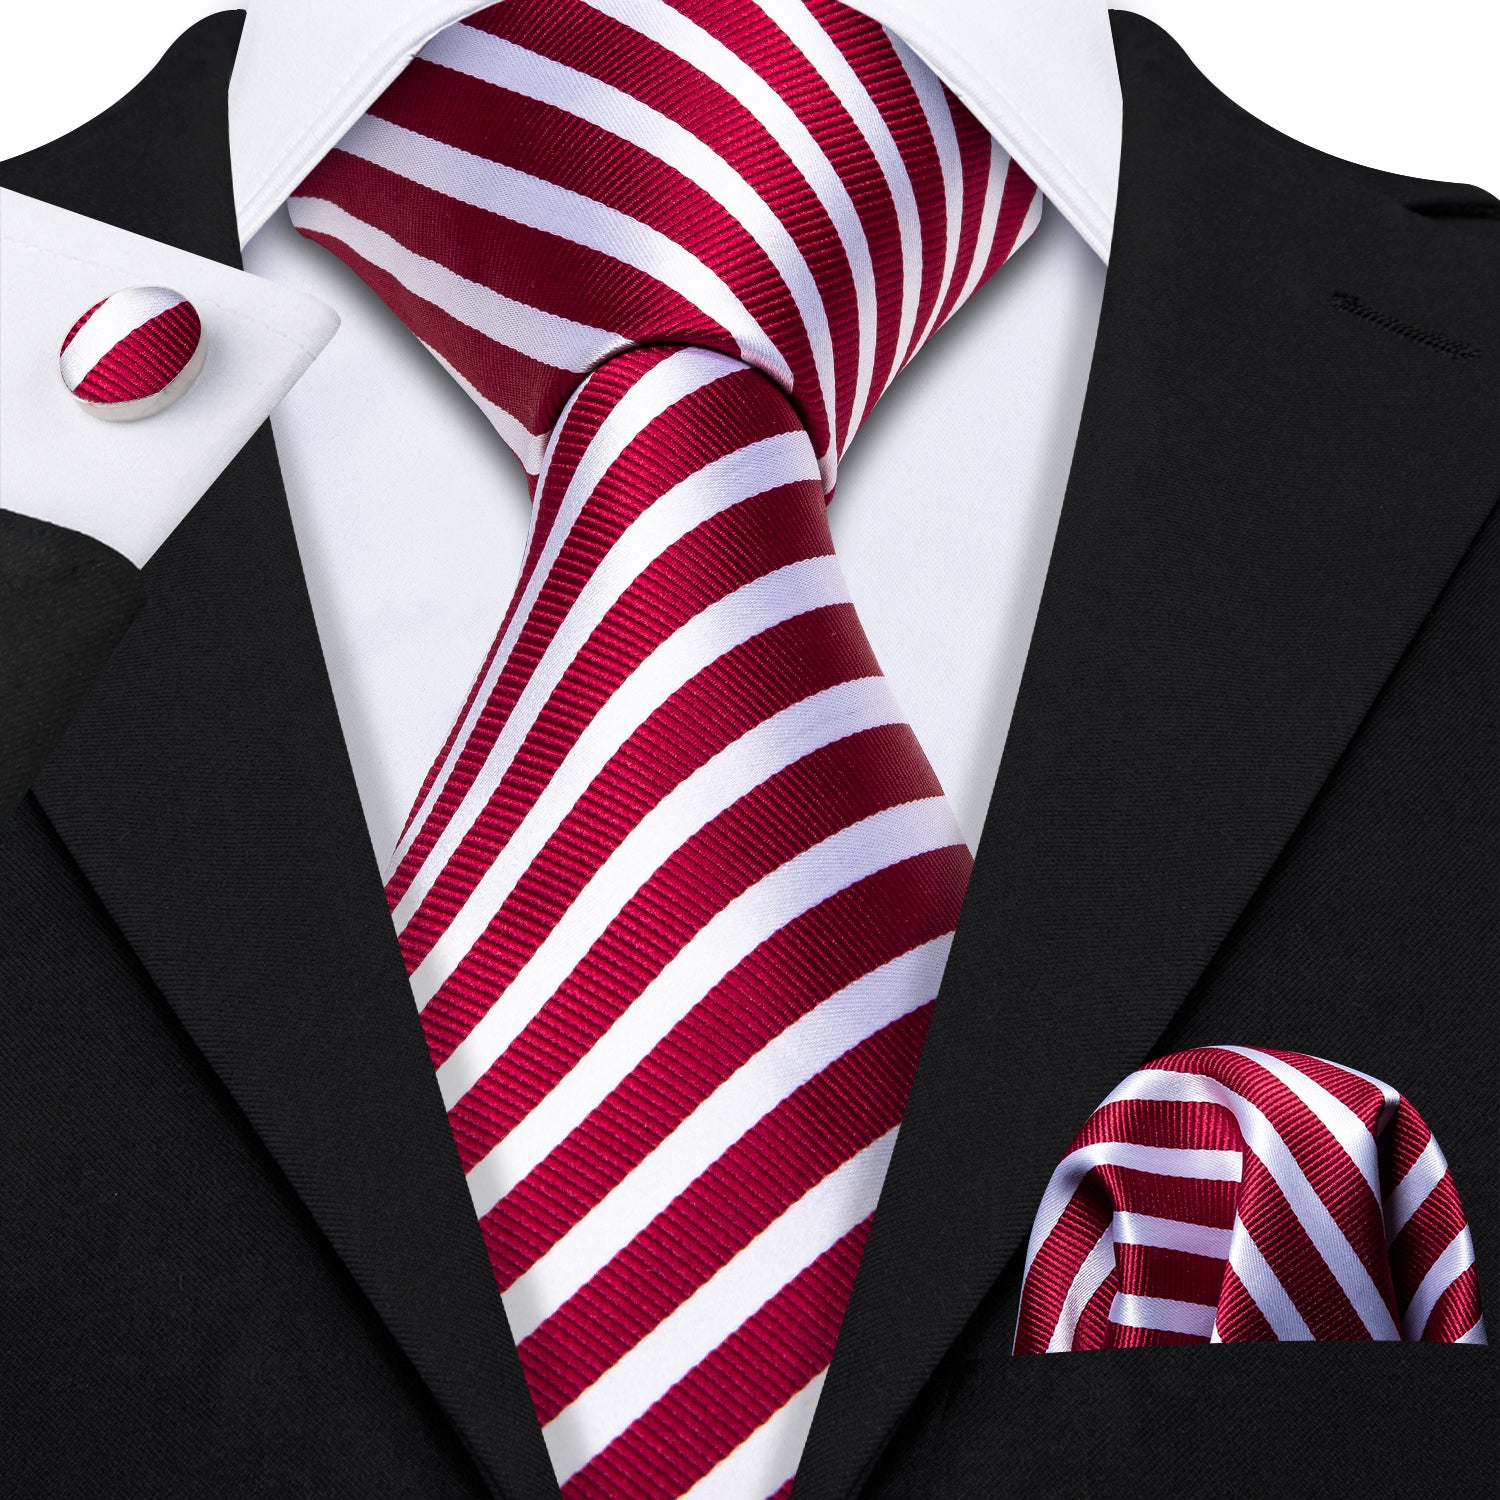 White and Red Stripe Tie Hanky Cufflinks Gift Box Set